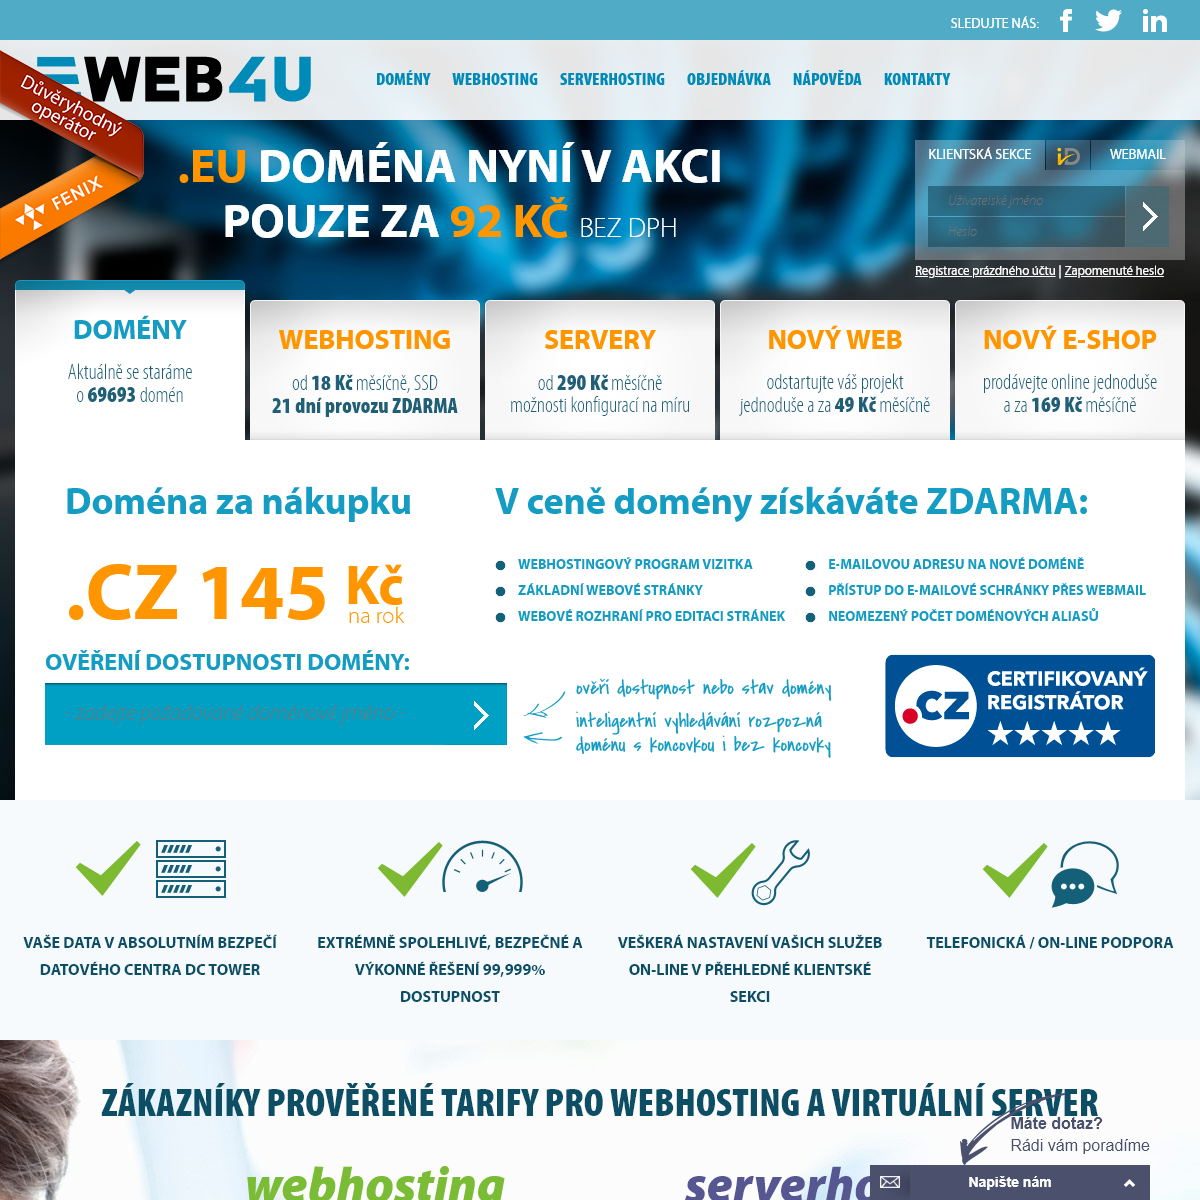 A complete backup of web4u.cz